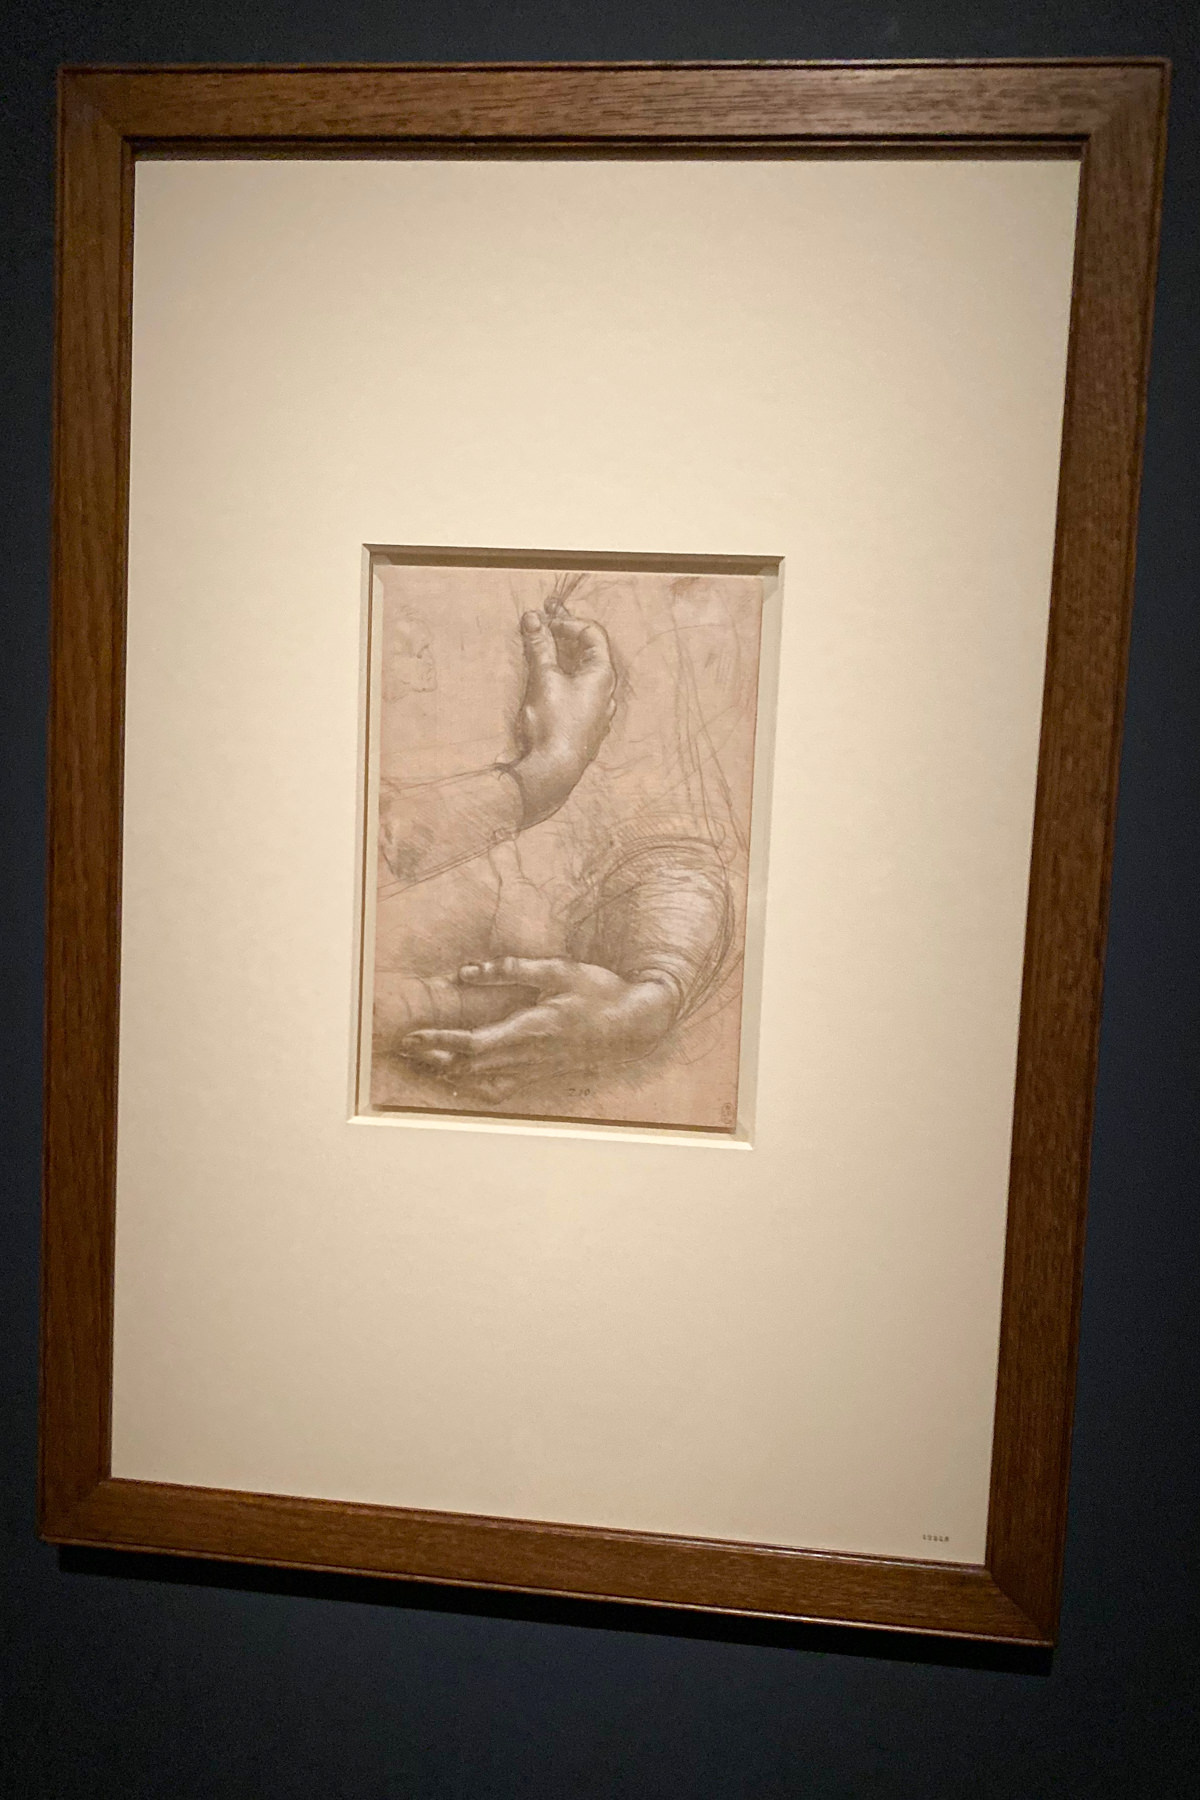 Leonardo da Vinci Exhibition in the Louvre Museum: Study of Hands